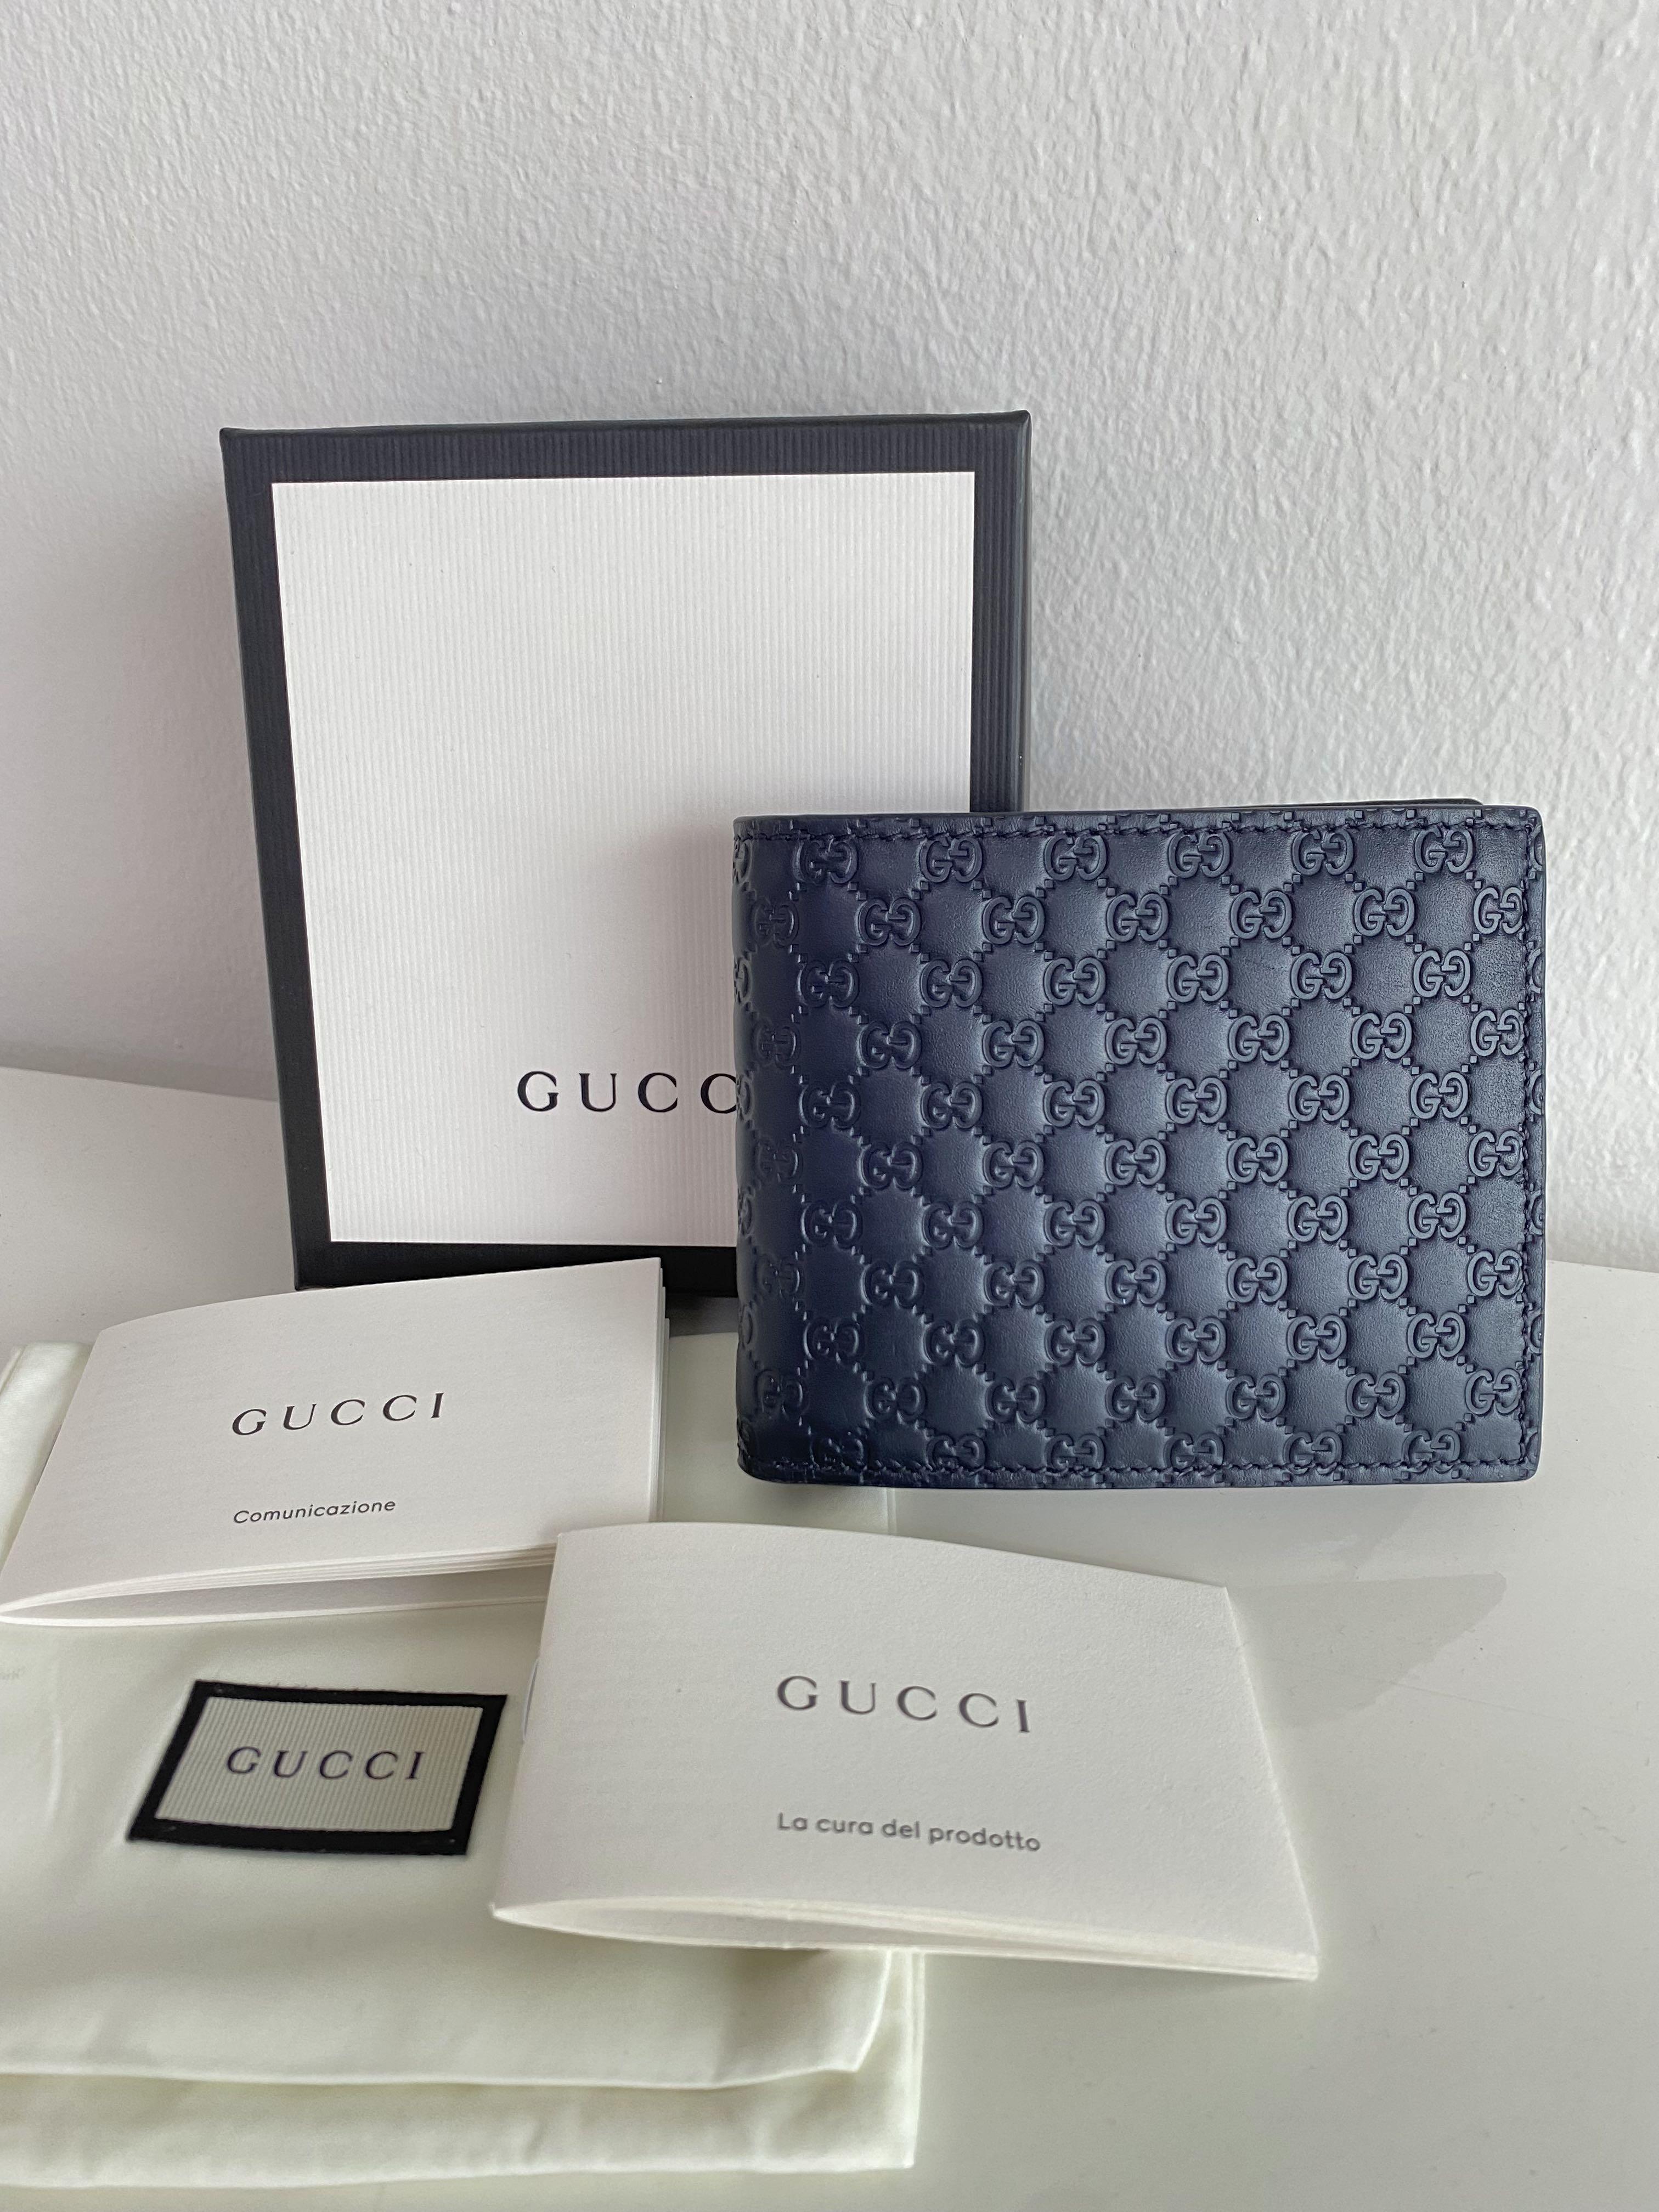 New Gucci Brown Microguccissima Leather Bi-Fold Men's Wallet 260987